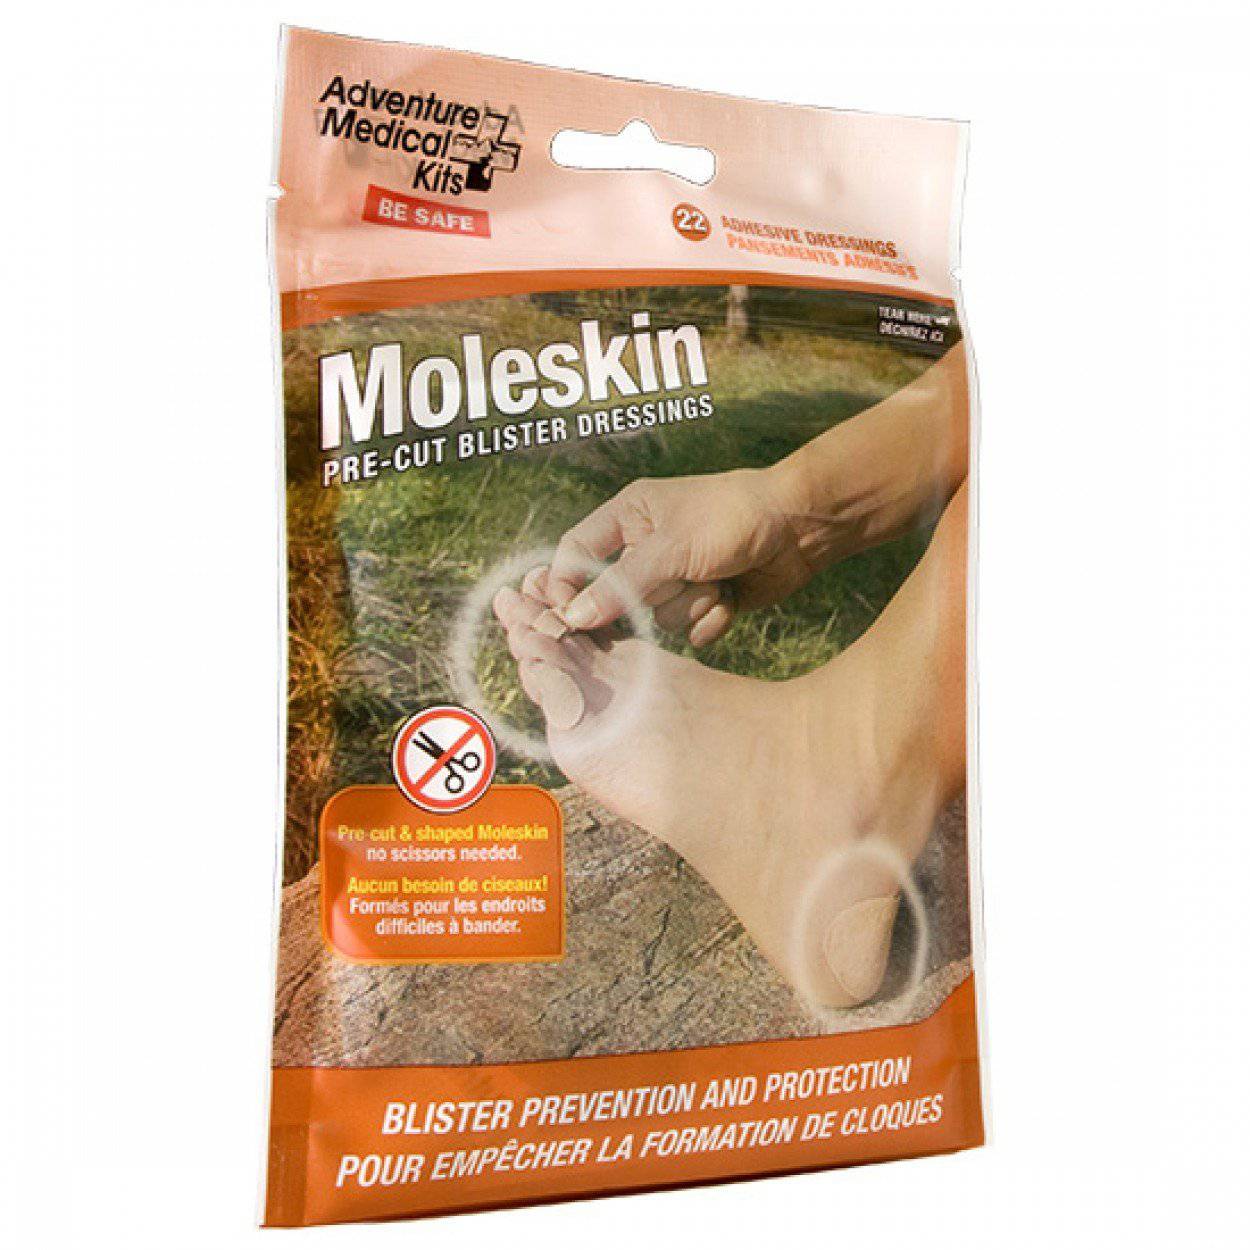 Adventure Medical Kits Moleskin Kit